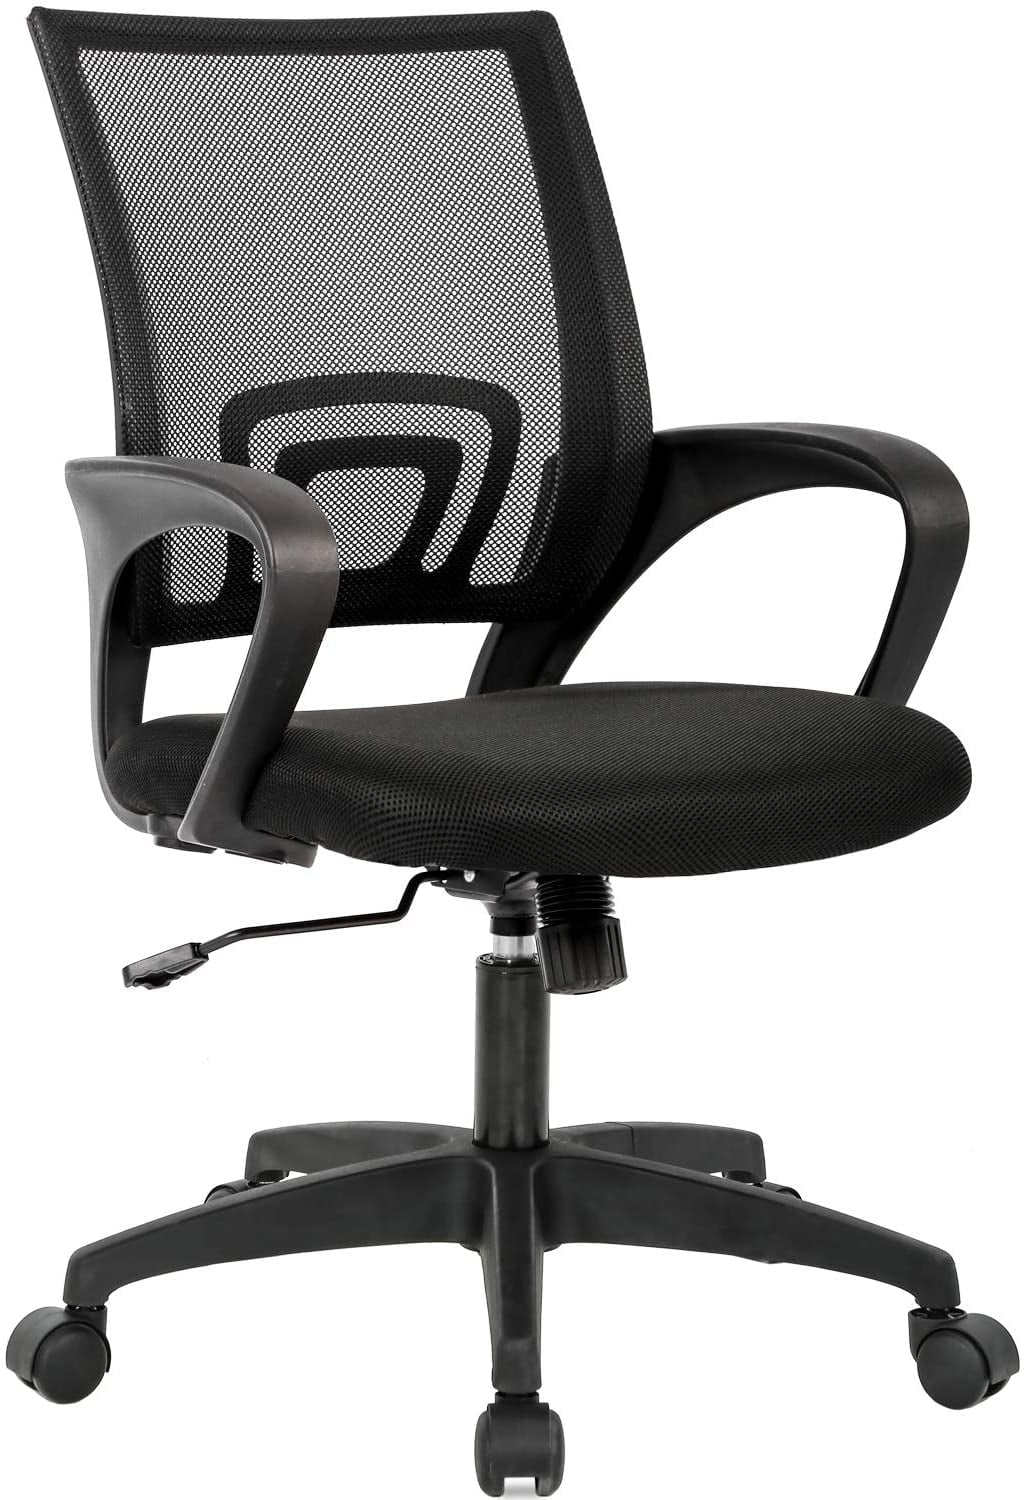 Black Mesh Chair Ergonomic Executive Swivel Office Gaming Chair Computer Desk 